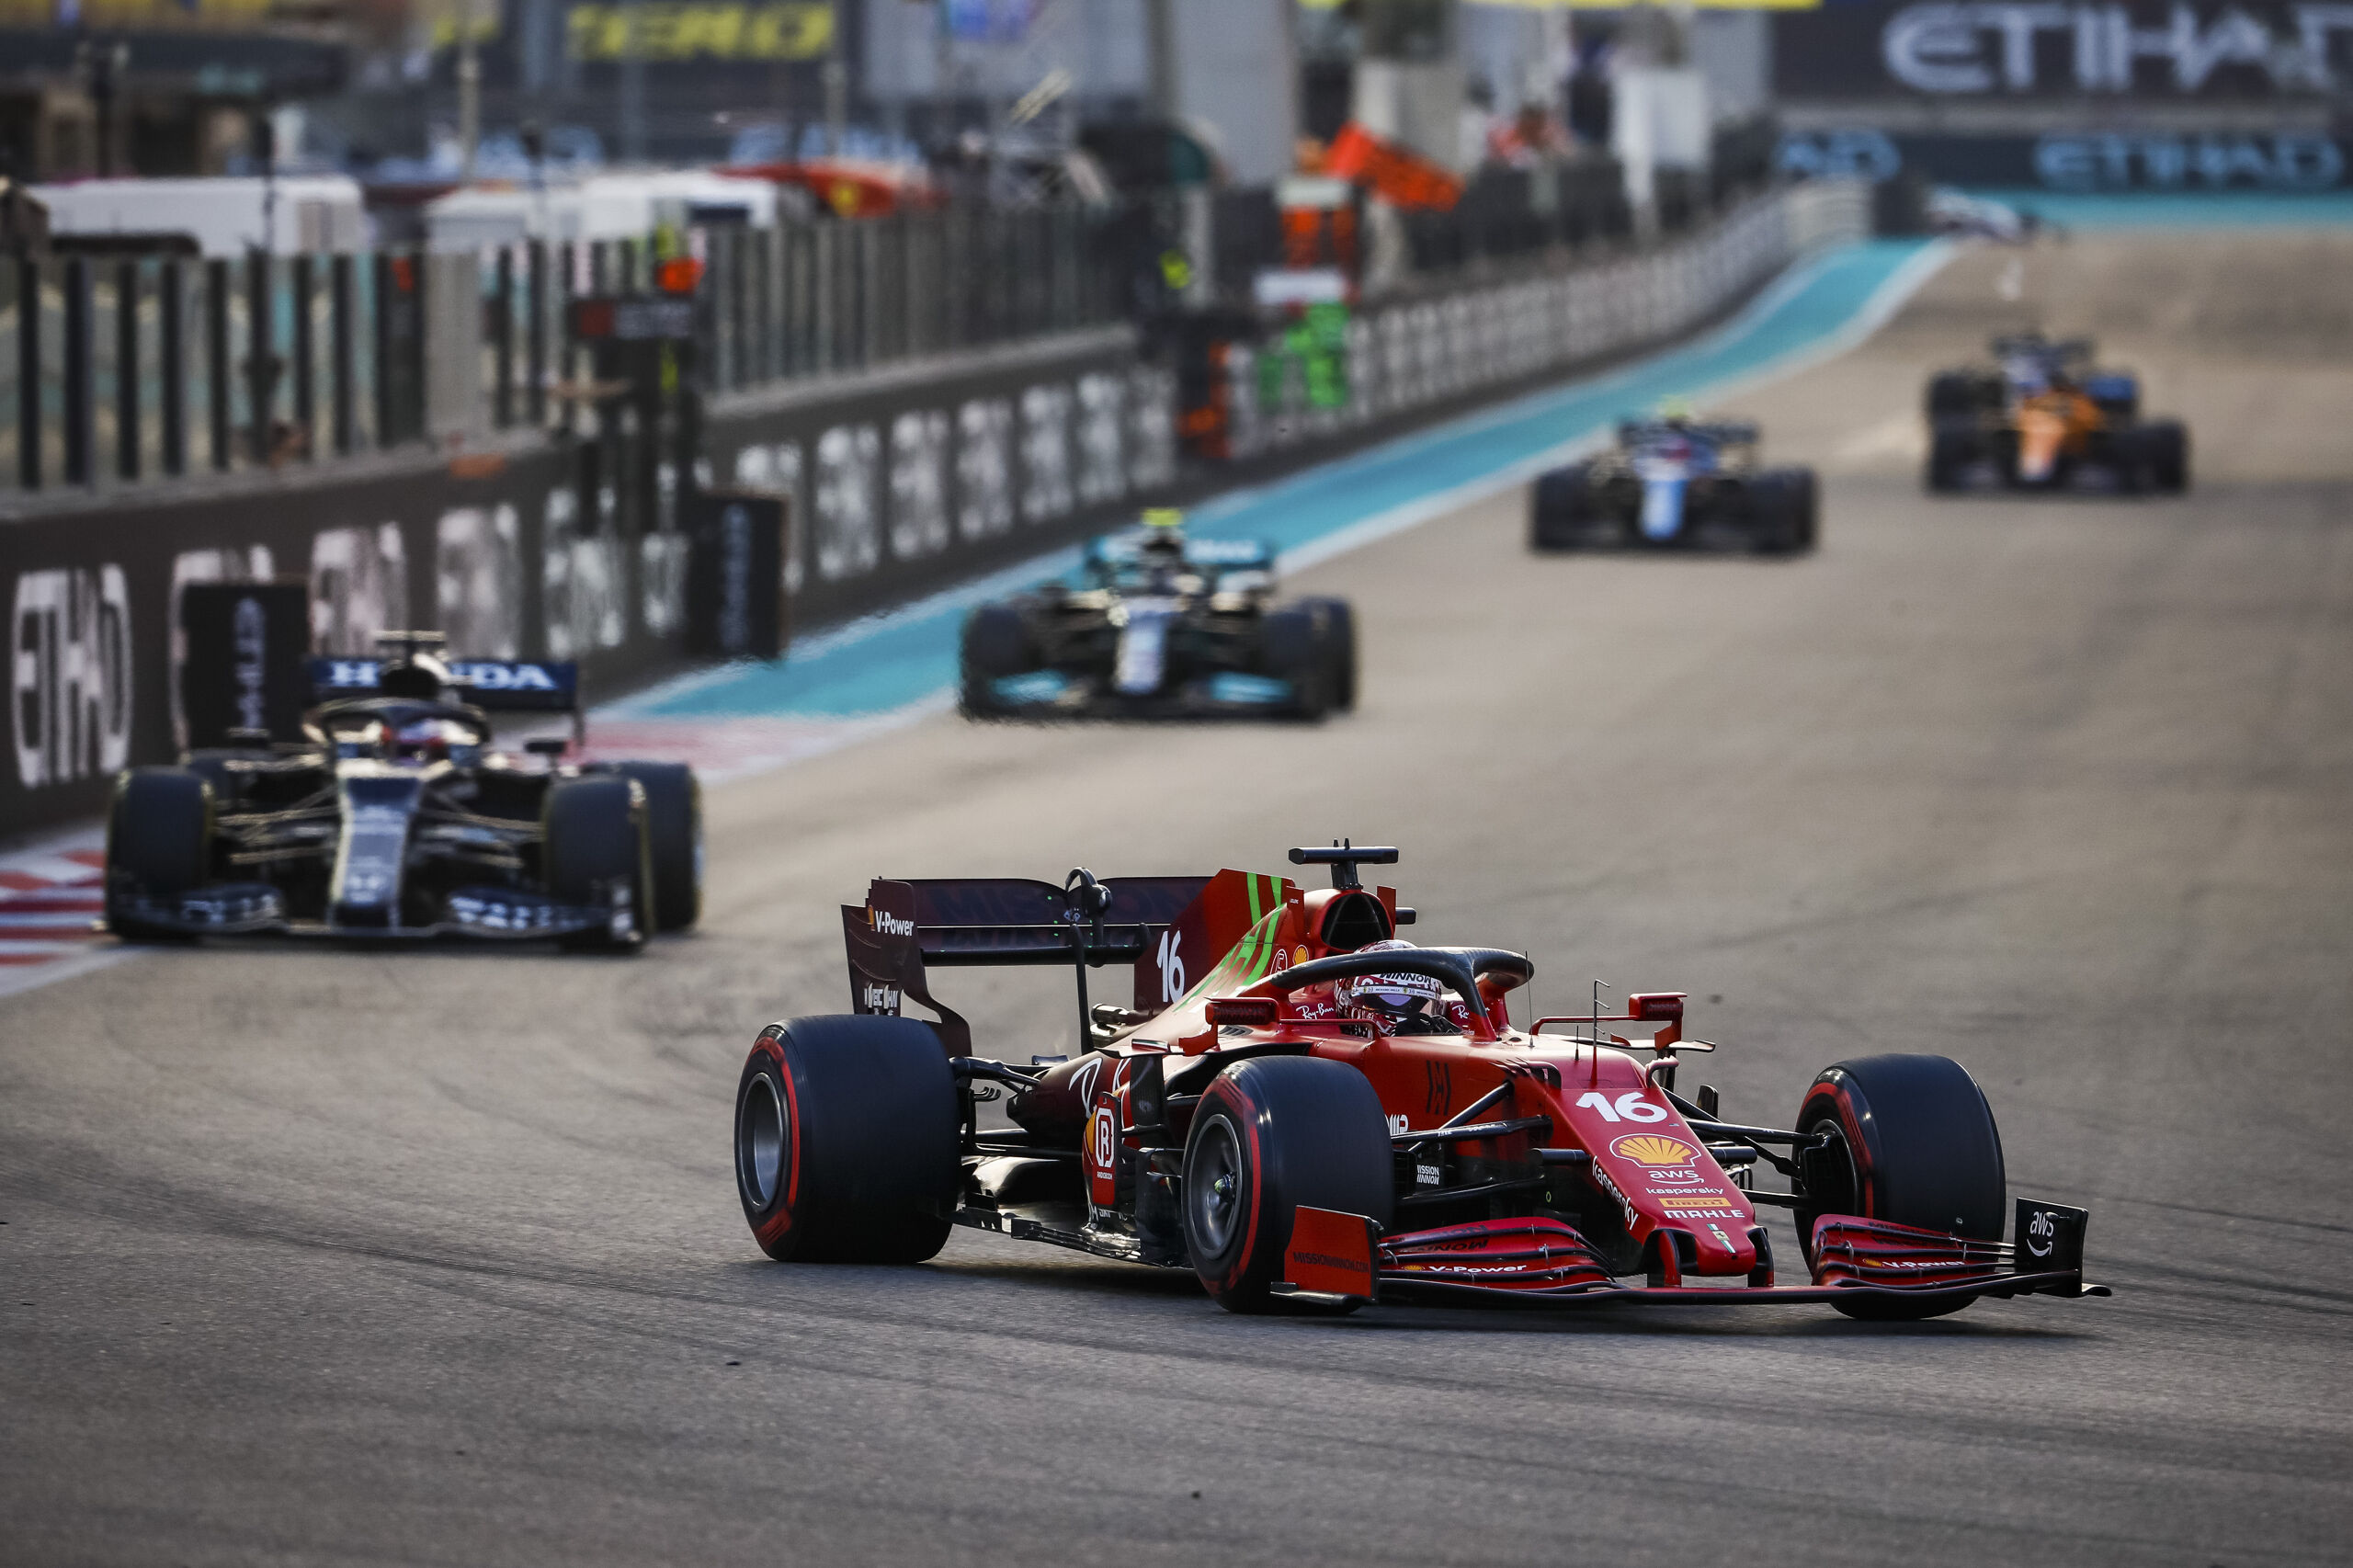  F1 Grand Prix in Abu Dhabi. 